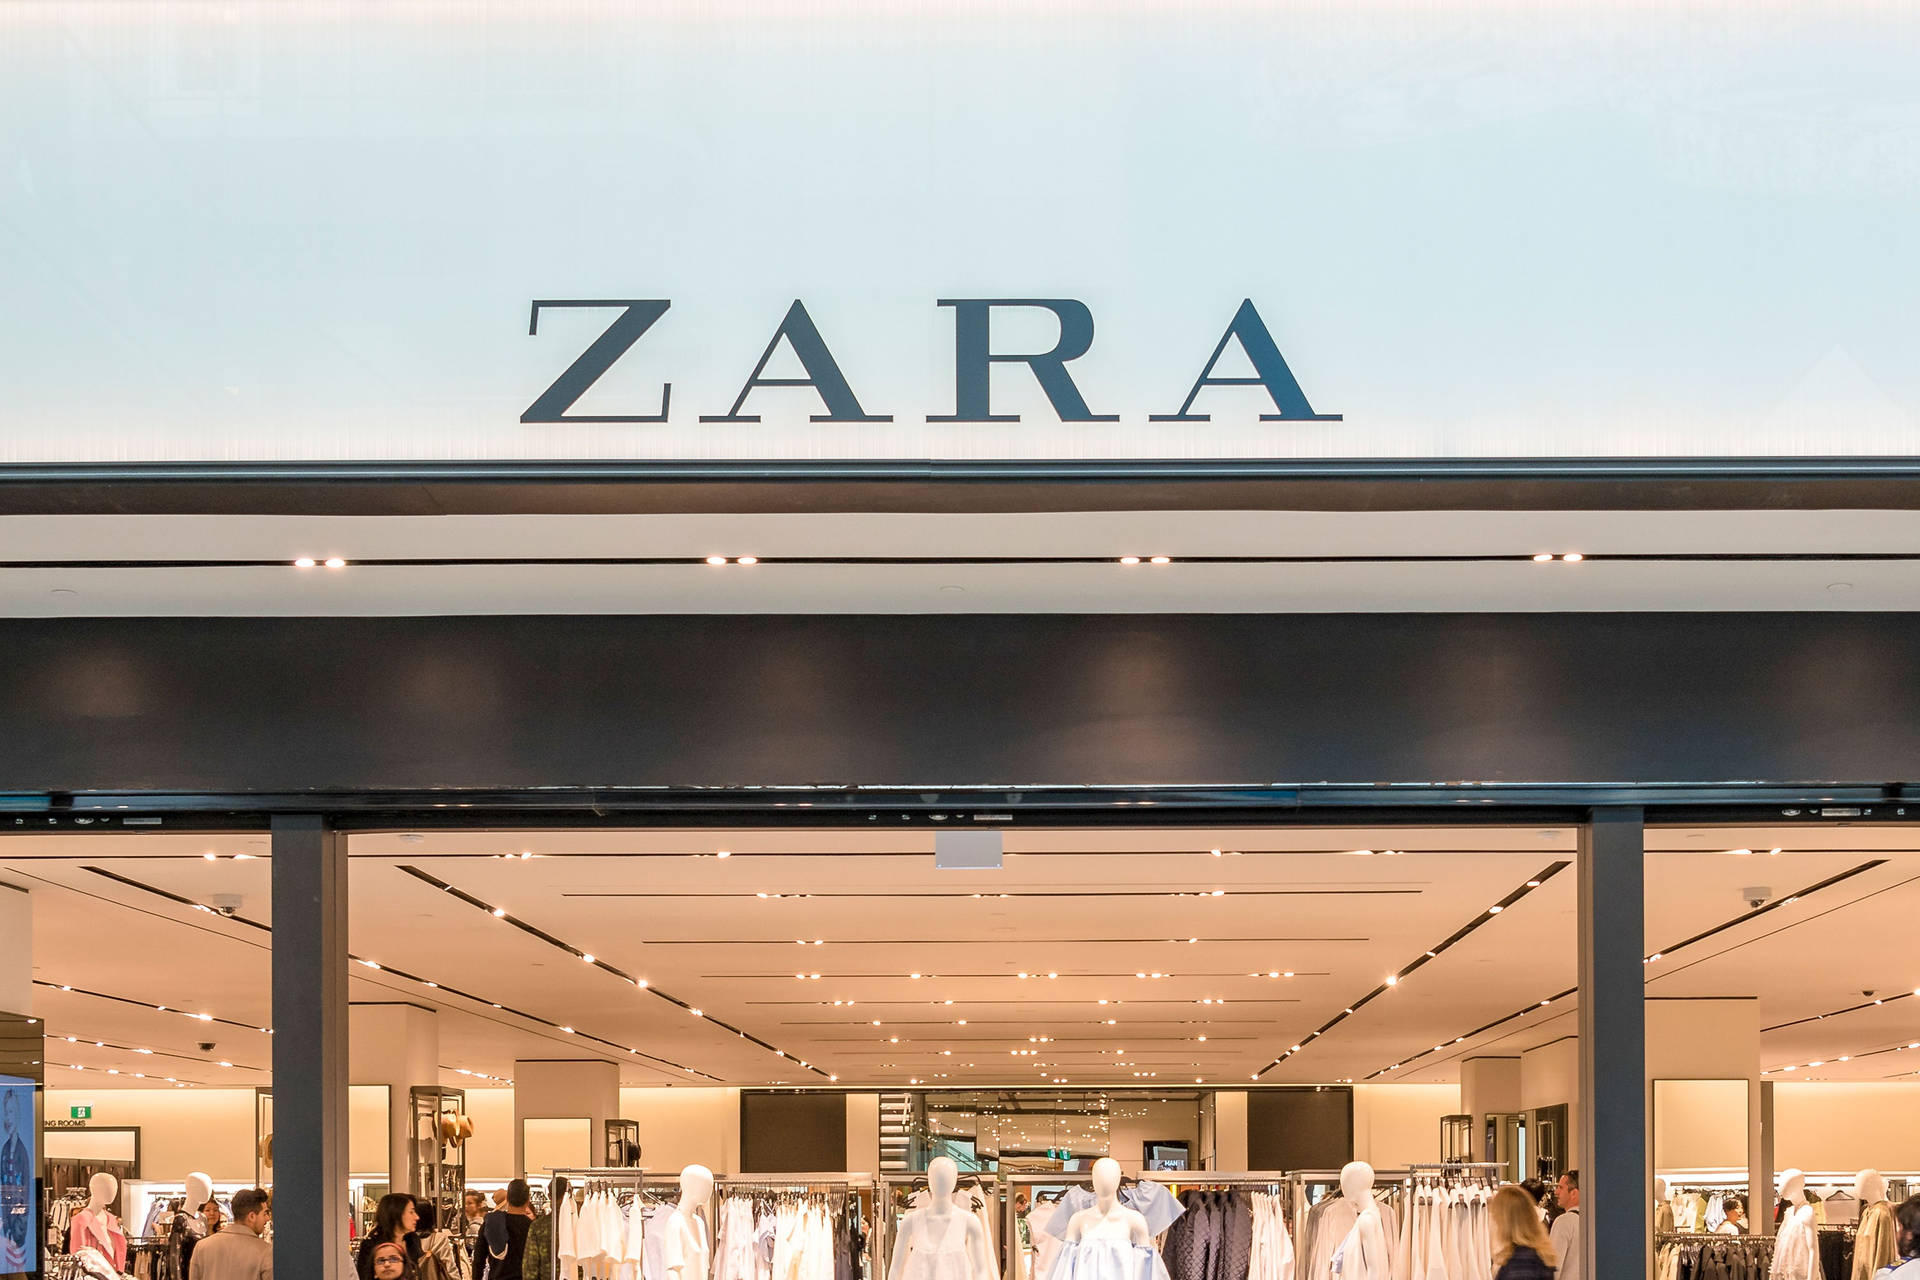 Zara Store Entrance Signage Wallpaper